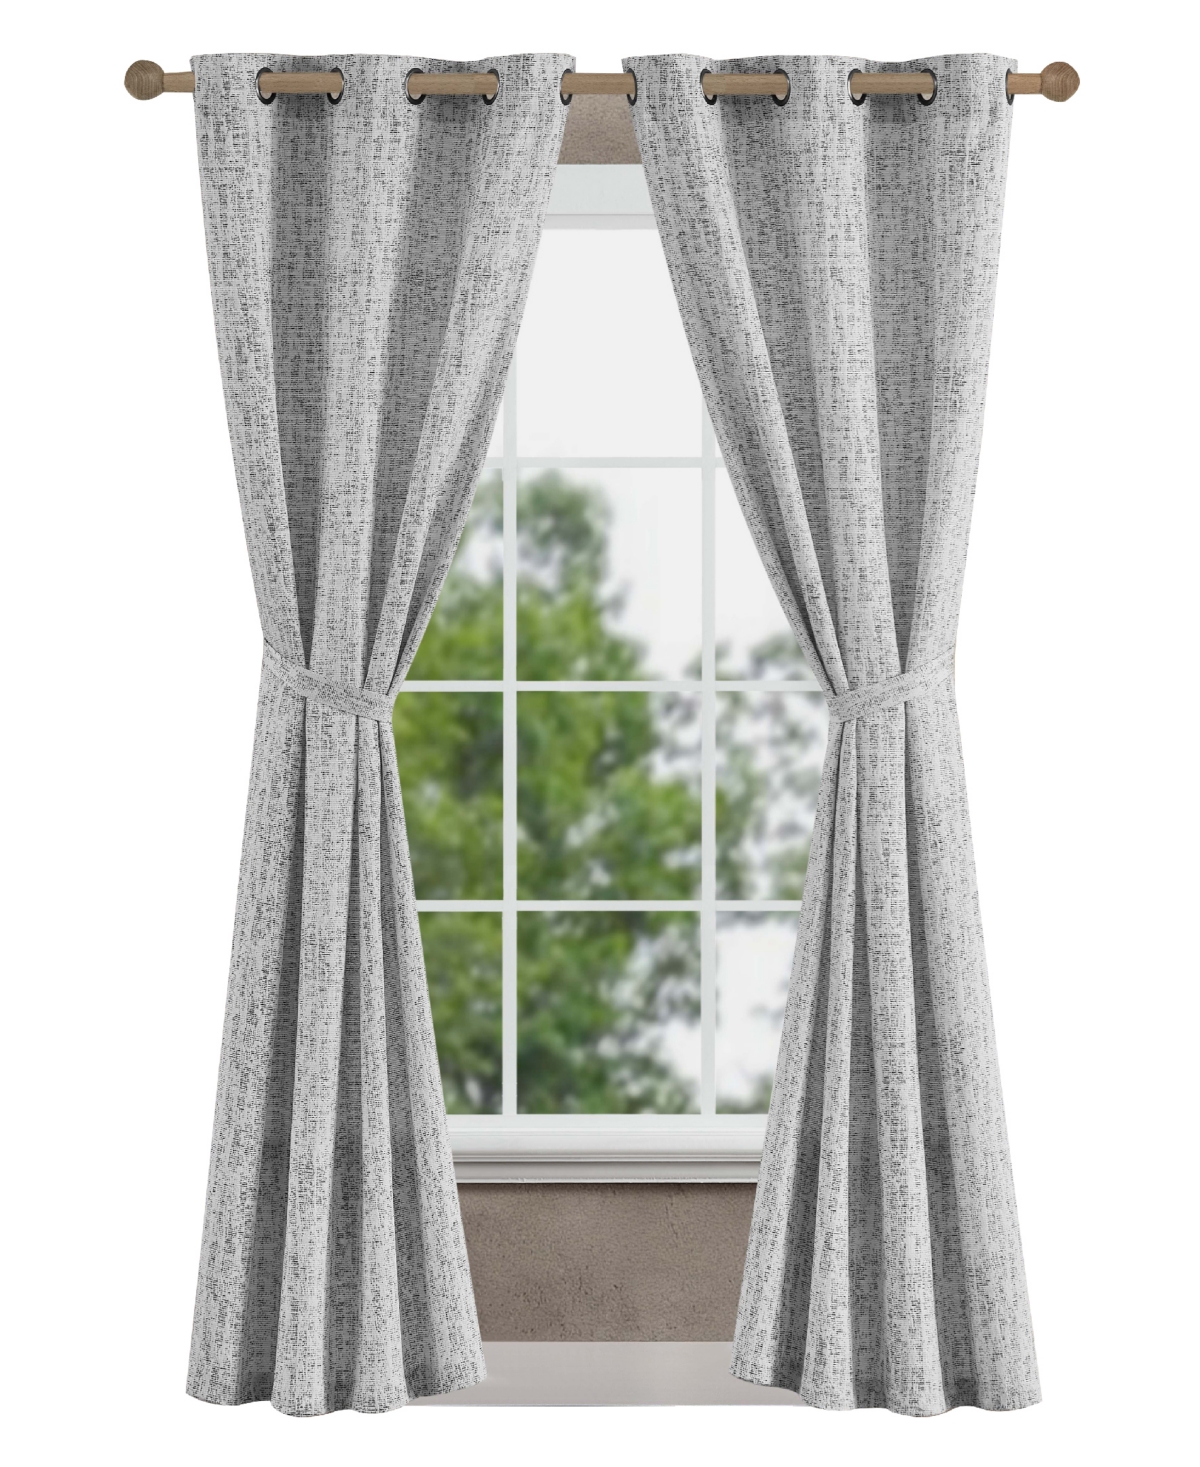 Tallulah Textured Blackout Grommet Window Curtain Panel Pair with Tiebacks, 38" x 84" - Taupe